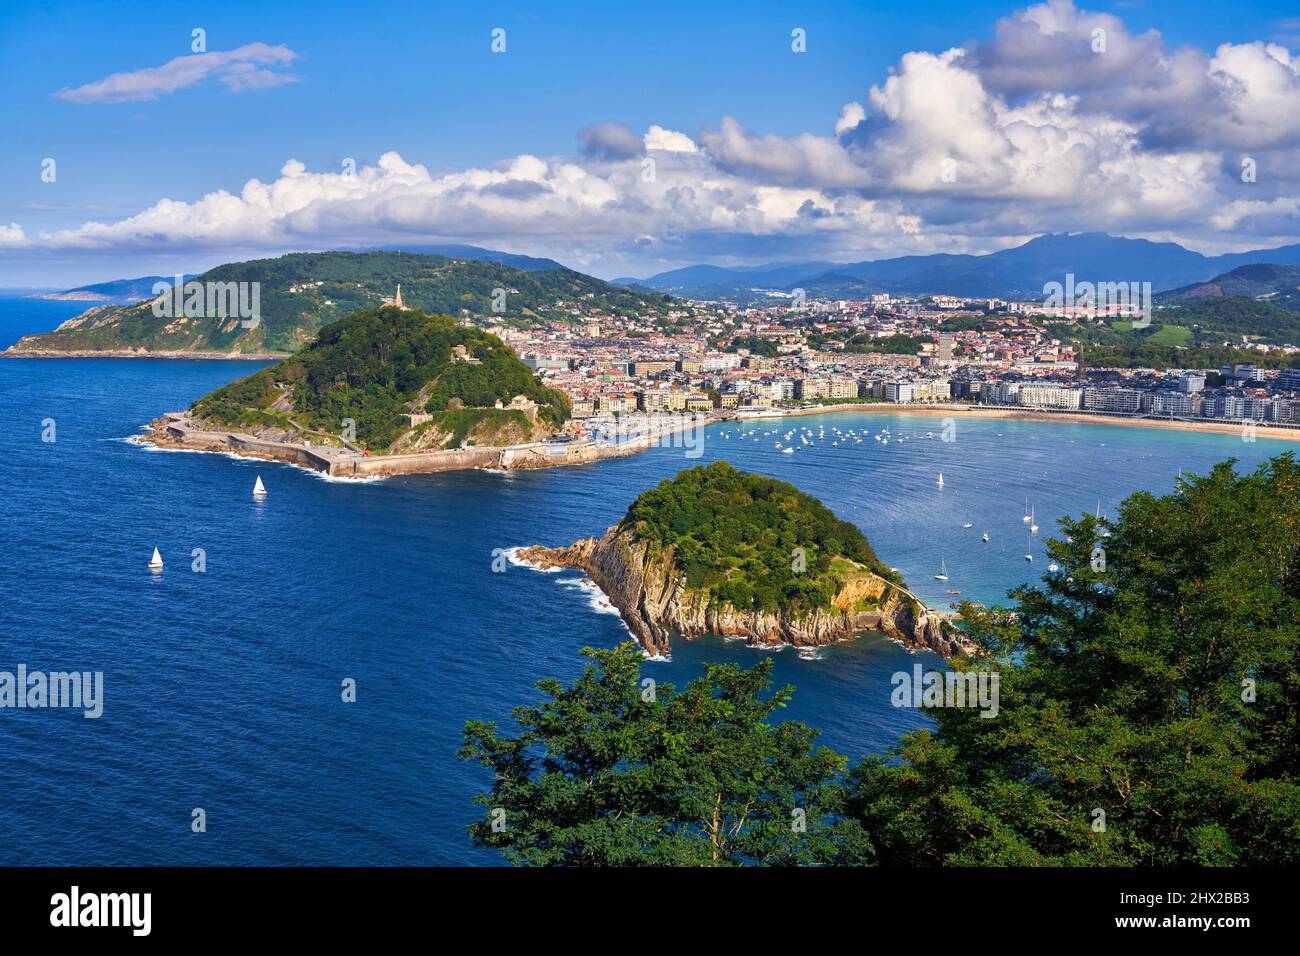 View of La Concha Bay from Mount Igeldo, Santa Clara Island and Mount Urgull, Donostia, San Sebastian, cosmopolitan city of 187,000 inhabitants, Stock Photo